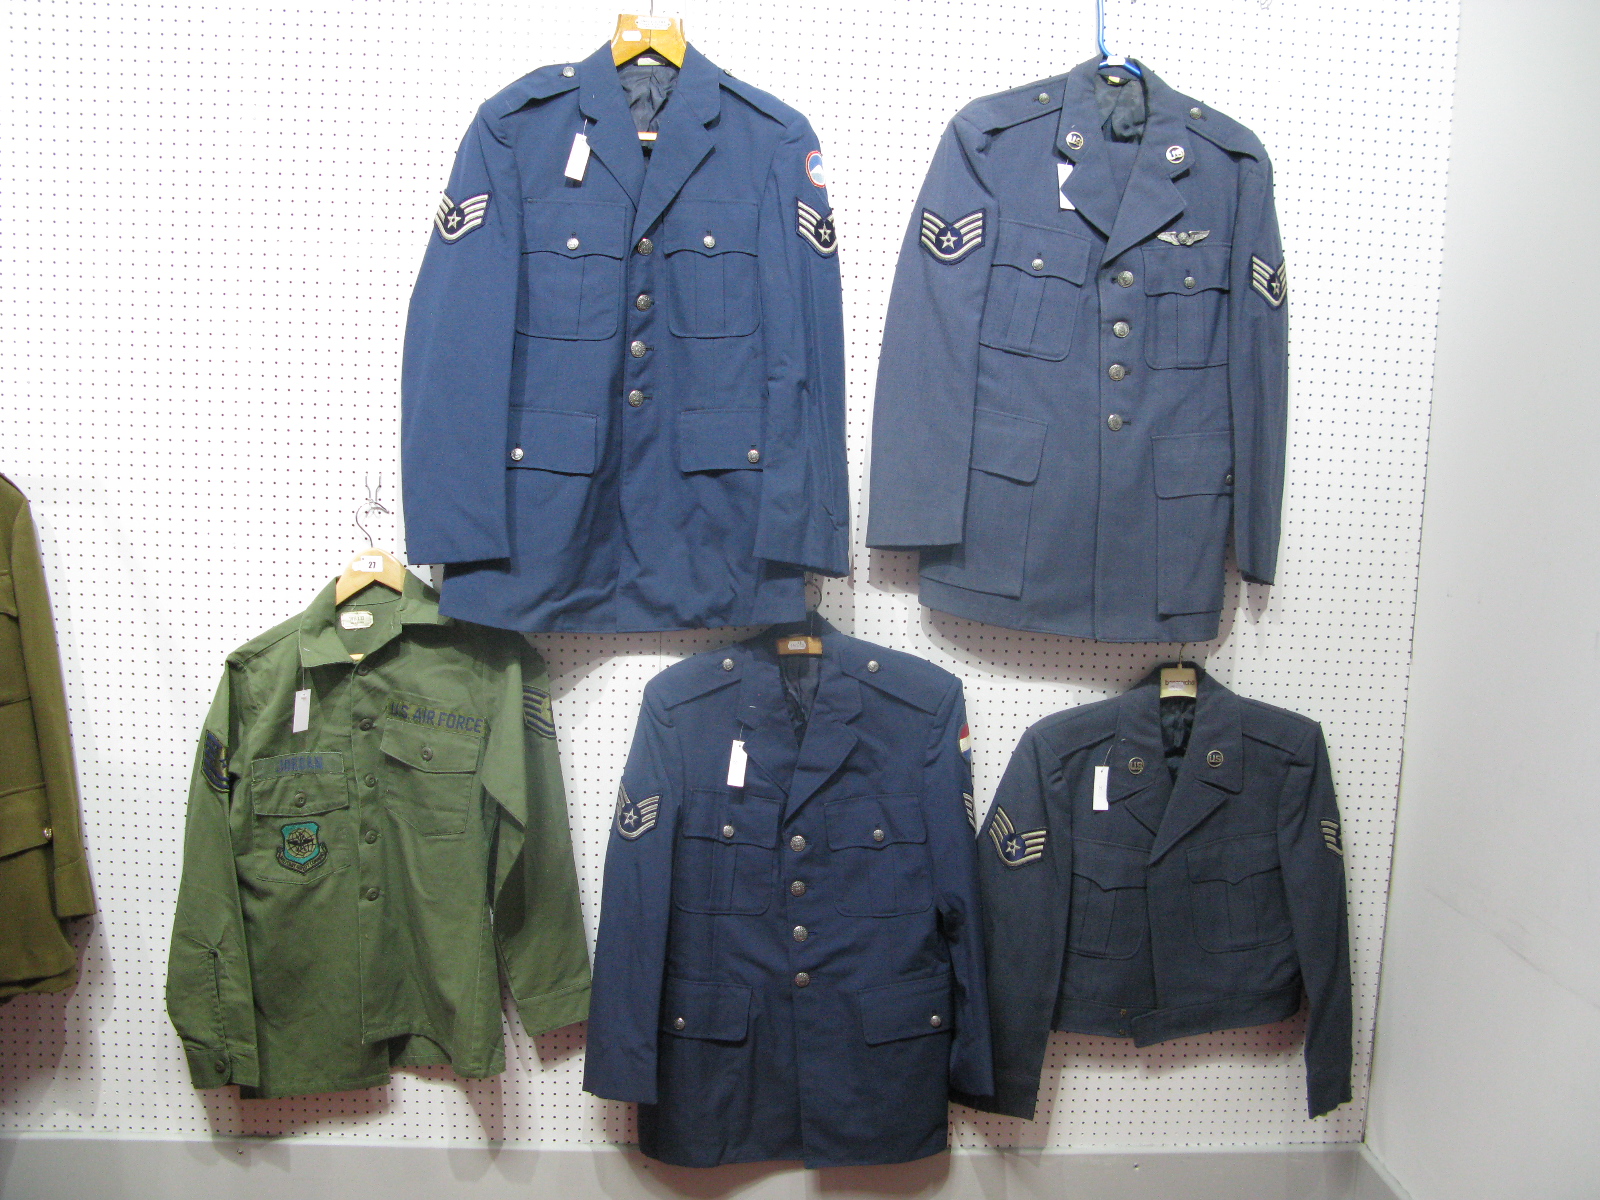 Five Modern American Airforce Tunics and Shirts.